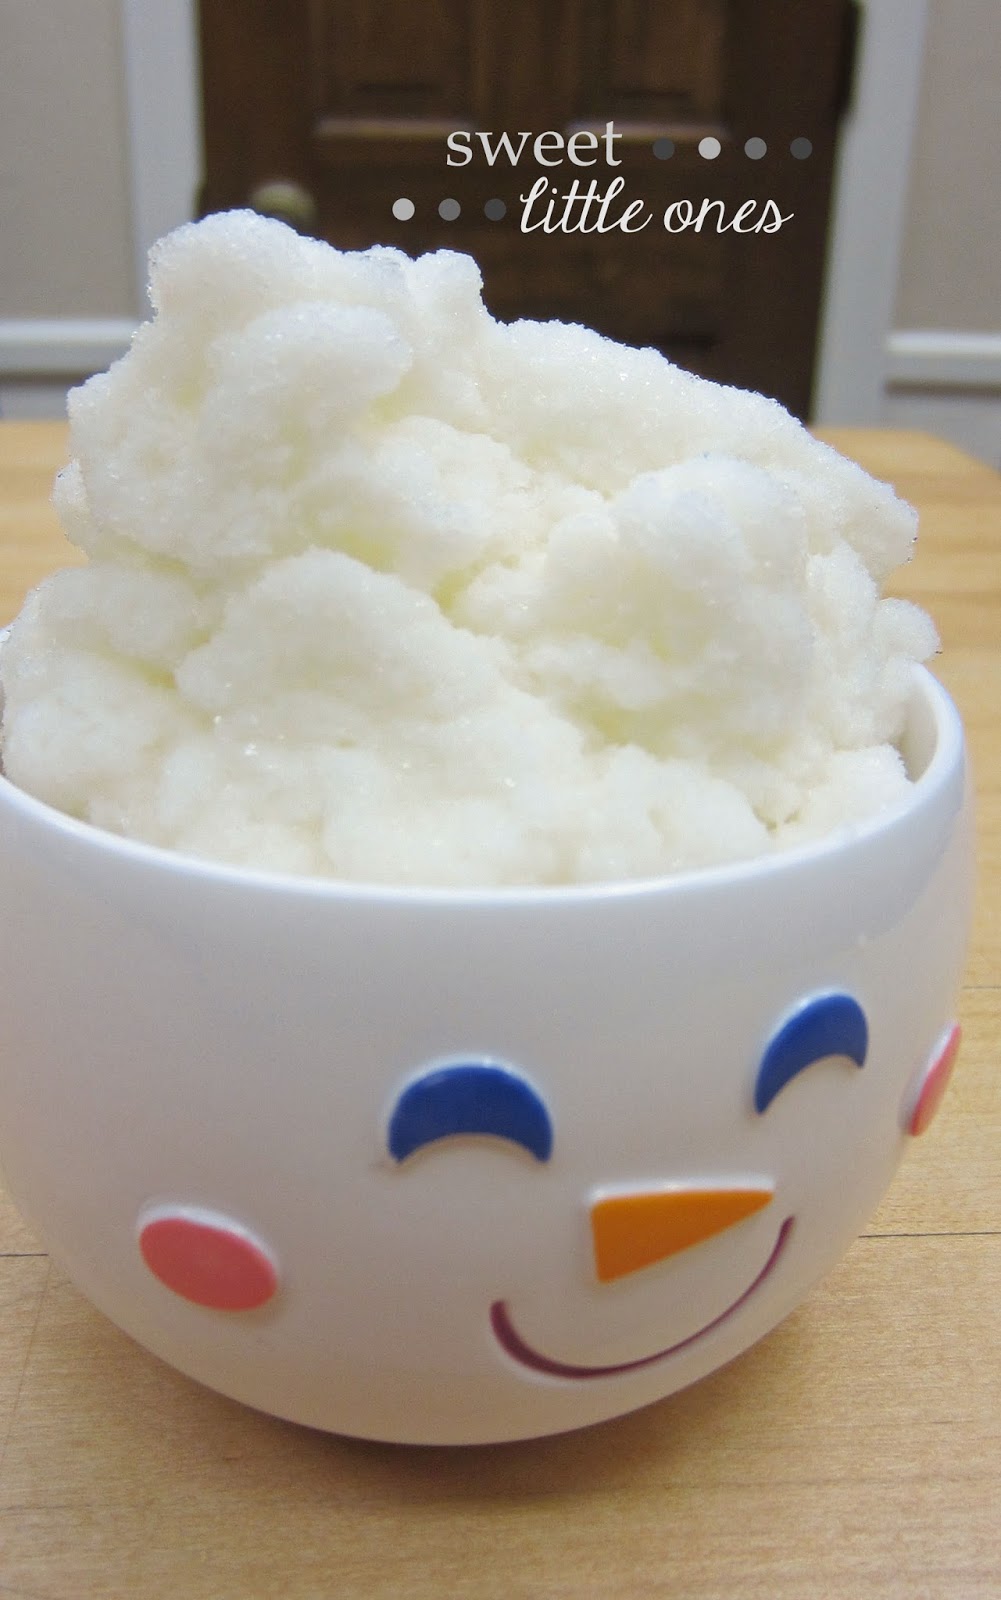 How To Make Snow Ice Cream: Easy Recipe - www.sweetlittleonesblog.com